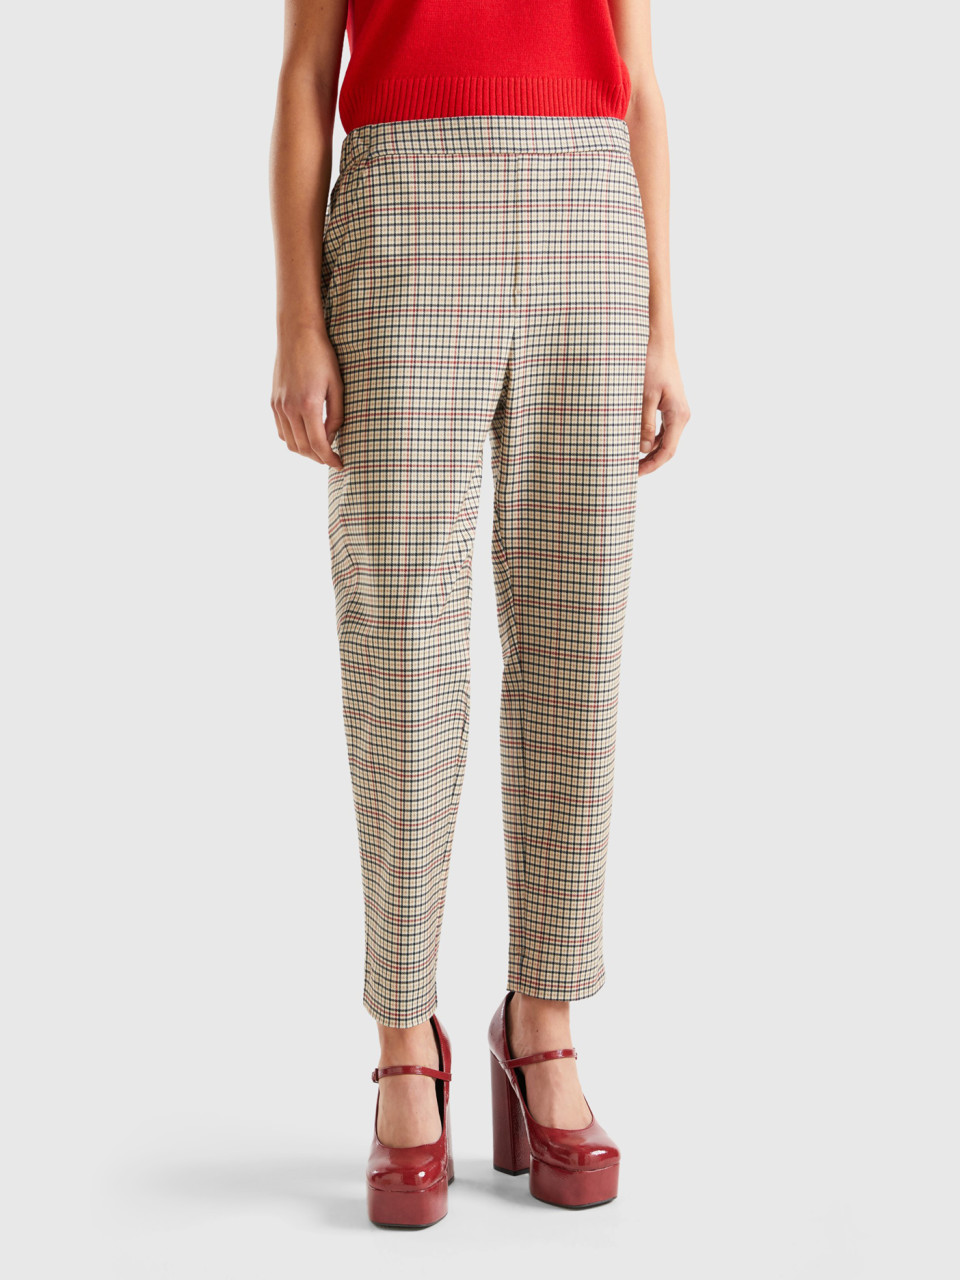 Benetton, Patterned Pants With Elastic Waist, Multi-color, Women